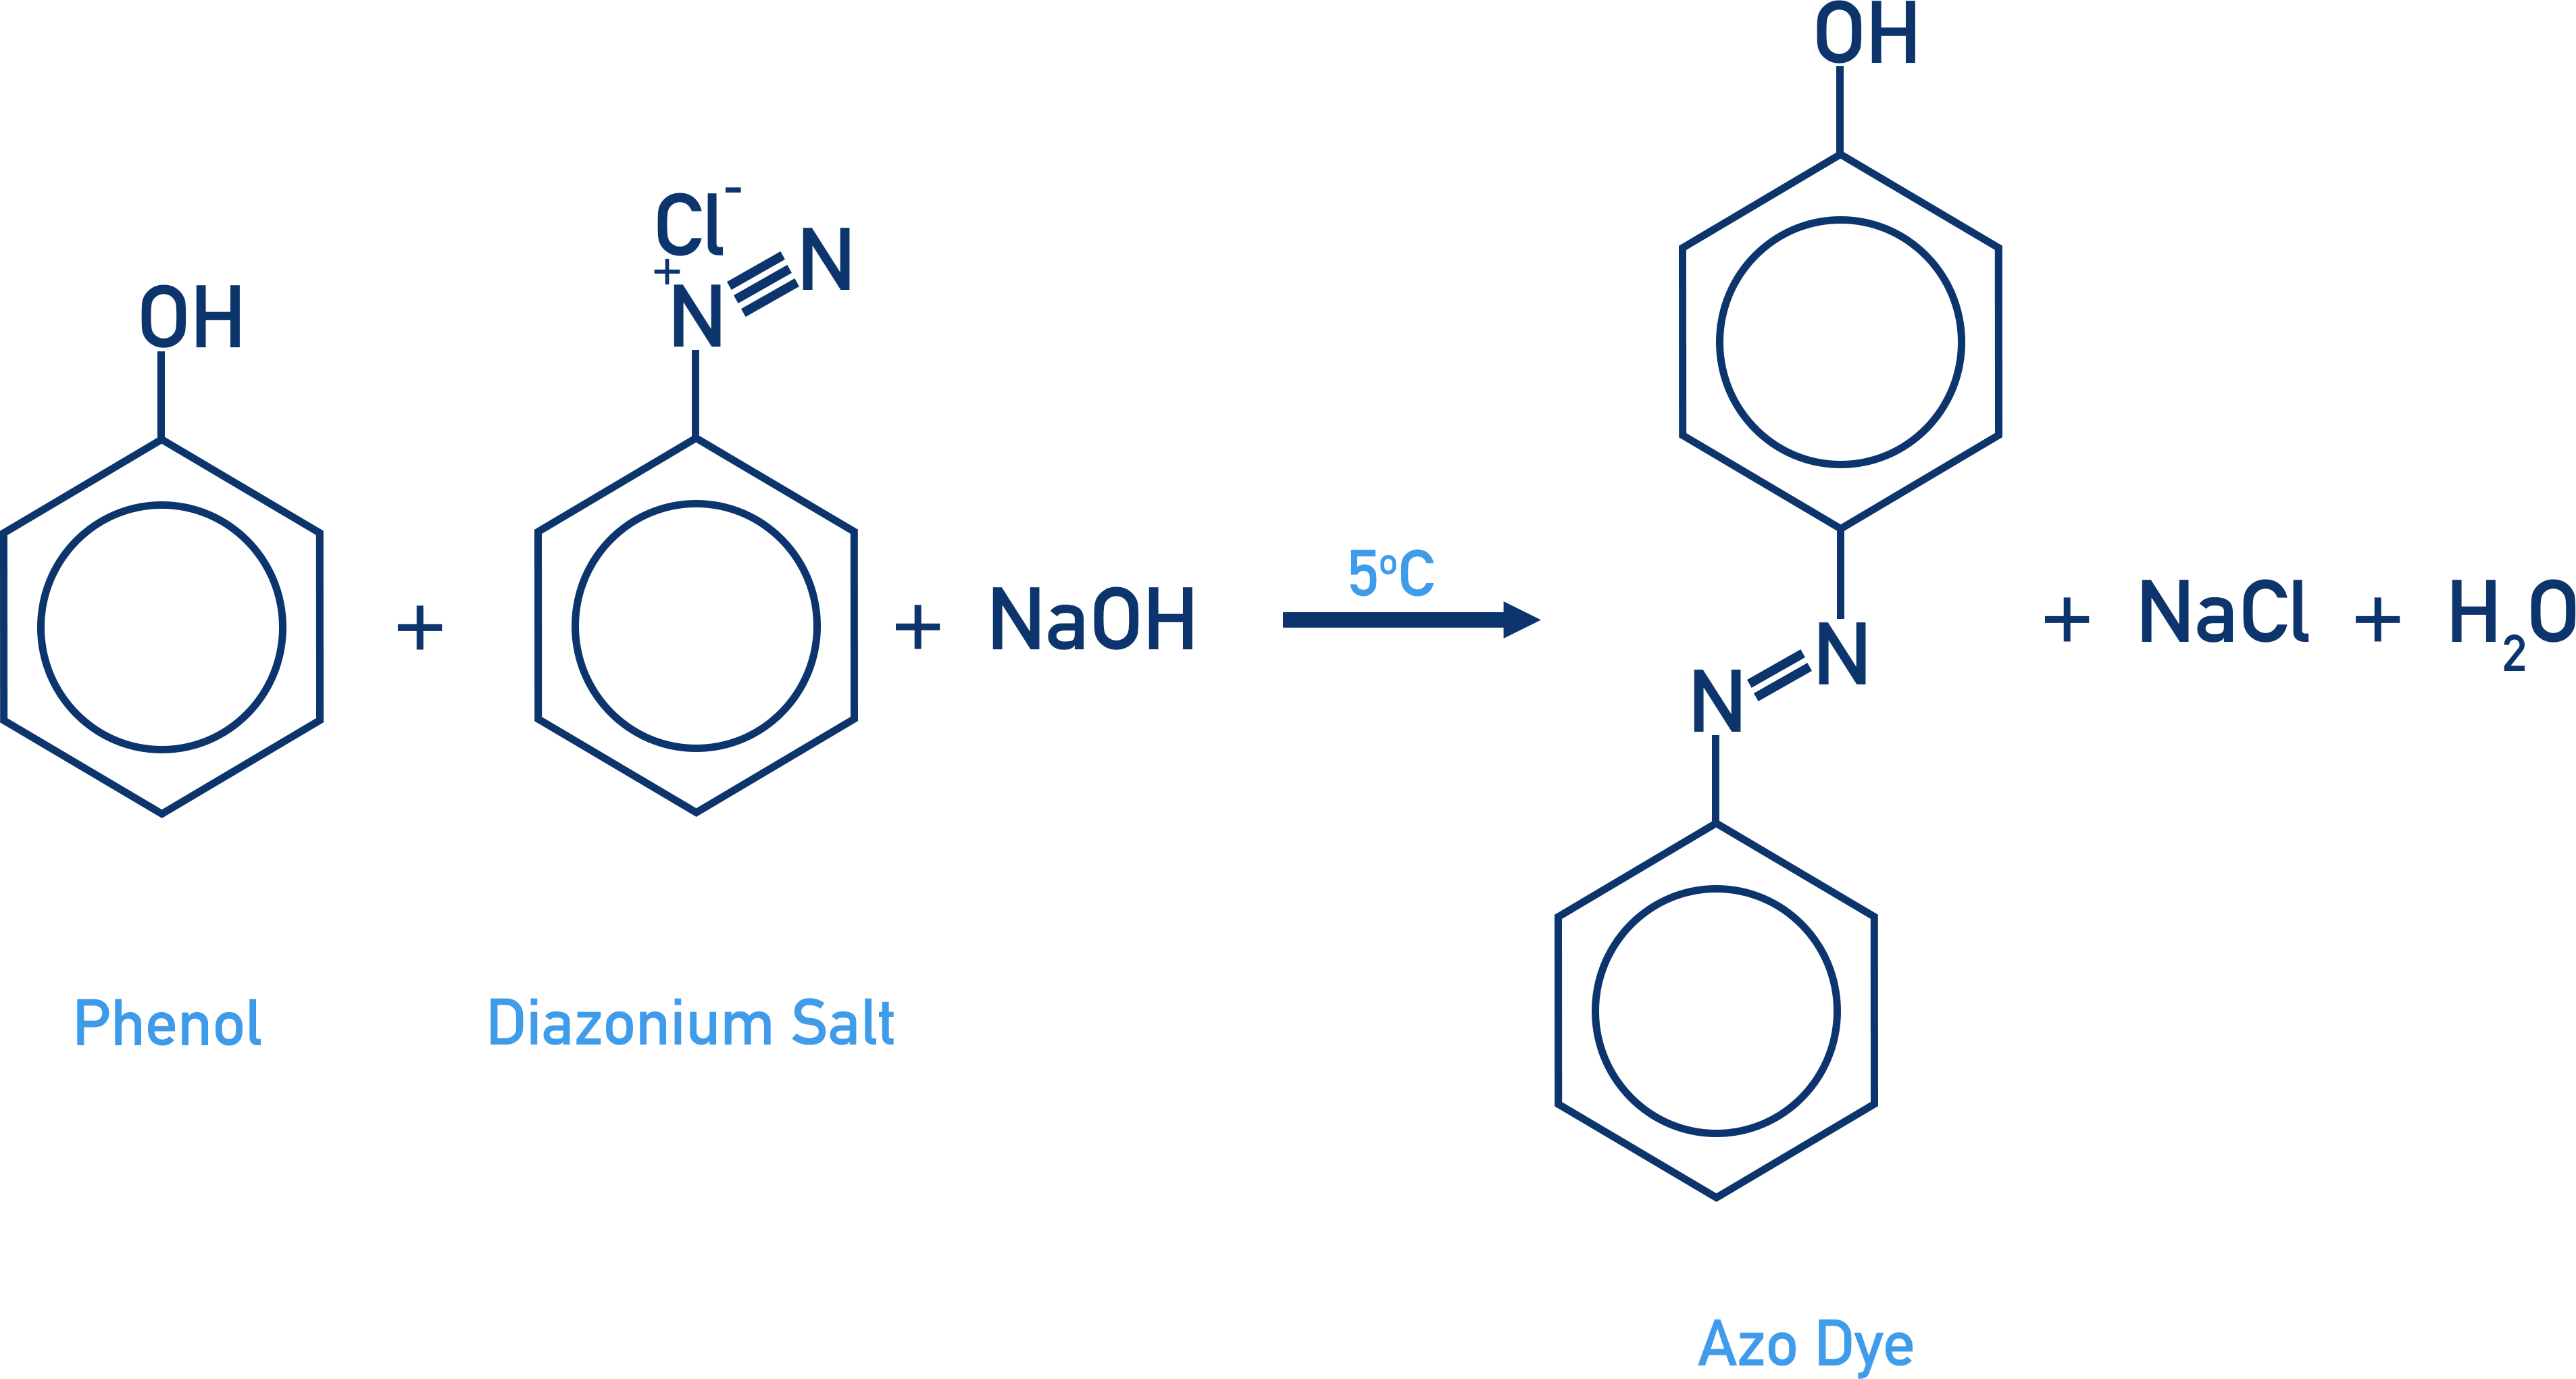 phenol diazonium salt sodium hydroxide azo dye sodium chloride